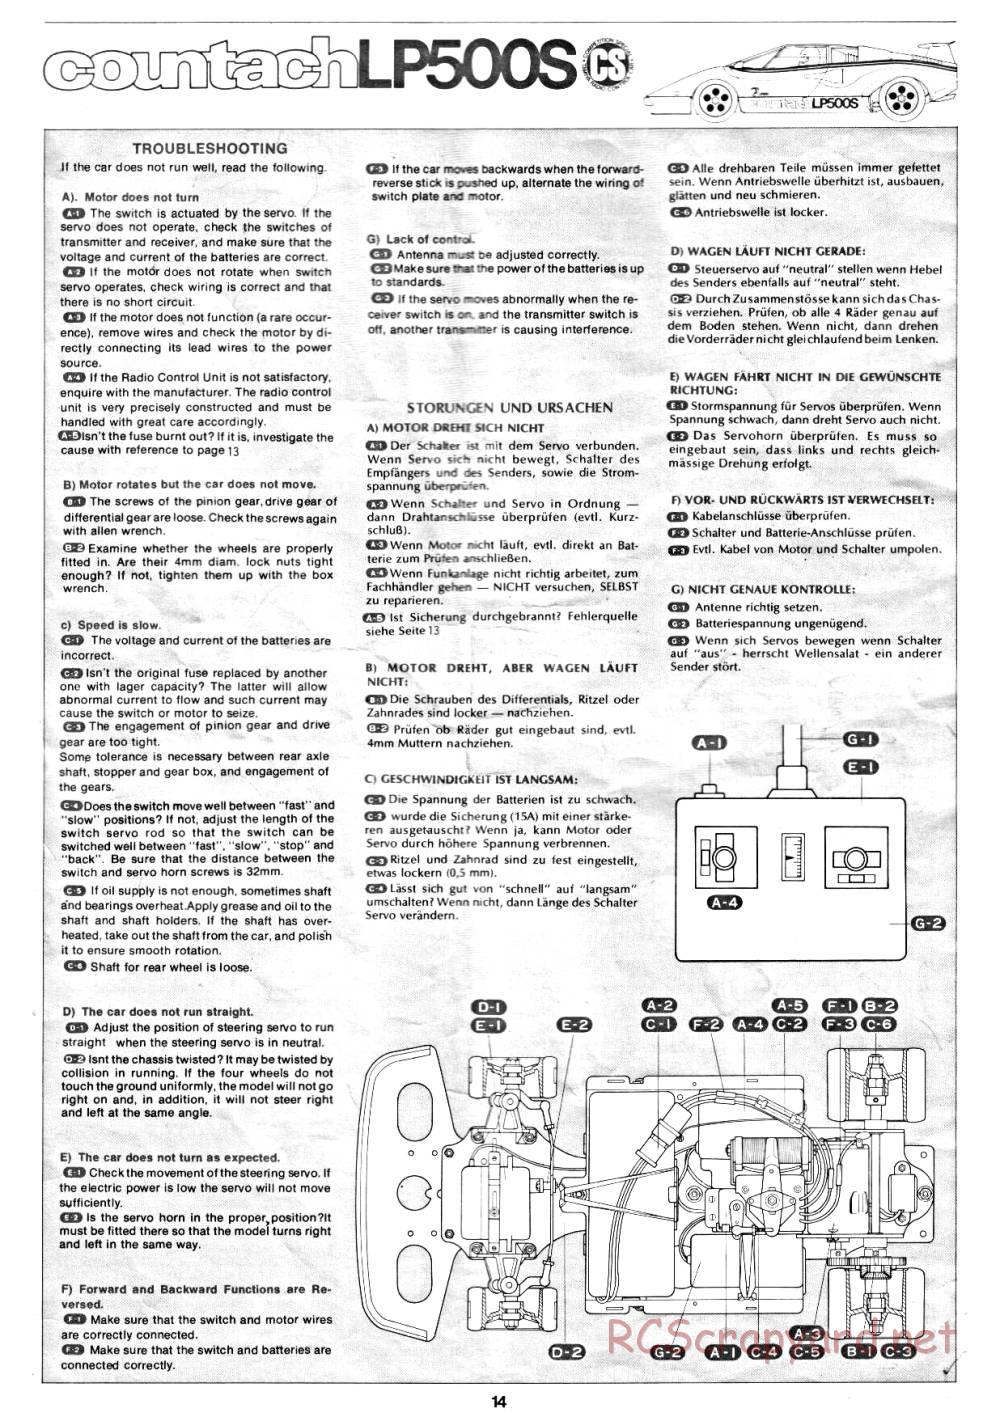 Tamiya - Lmbrghni Countach LP500S (CS) - 58008 - Manual - Page 14